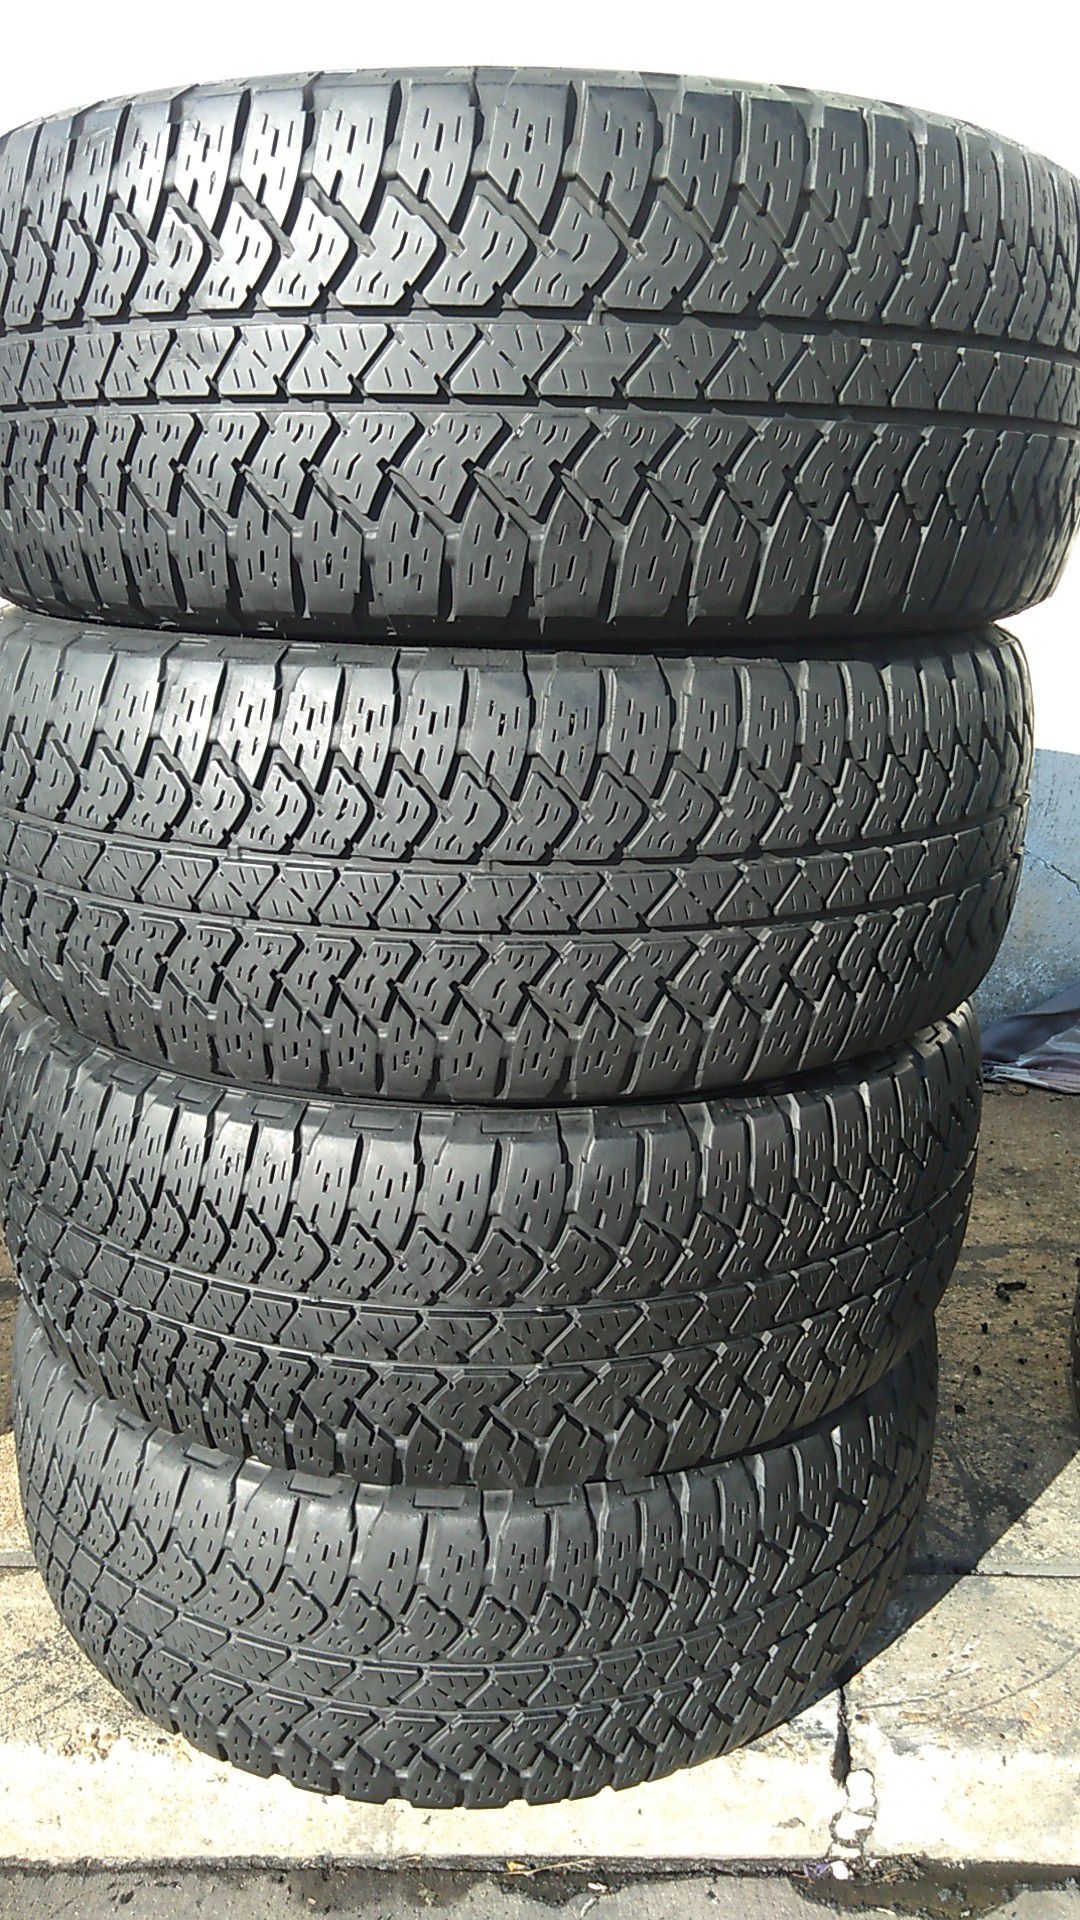 Four matching Bridgestone tires for sale 285/45/22